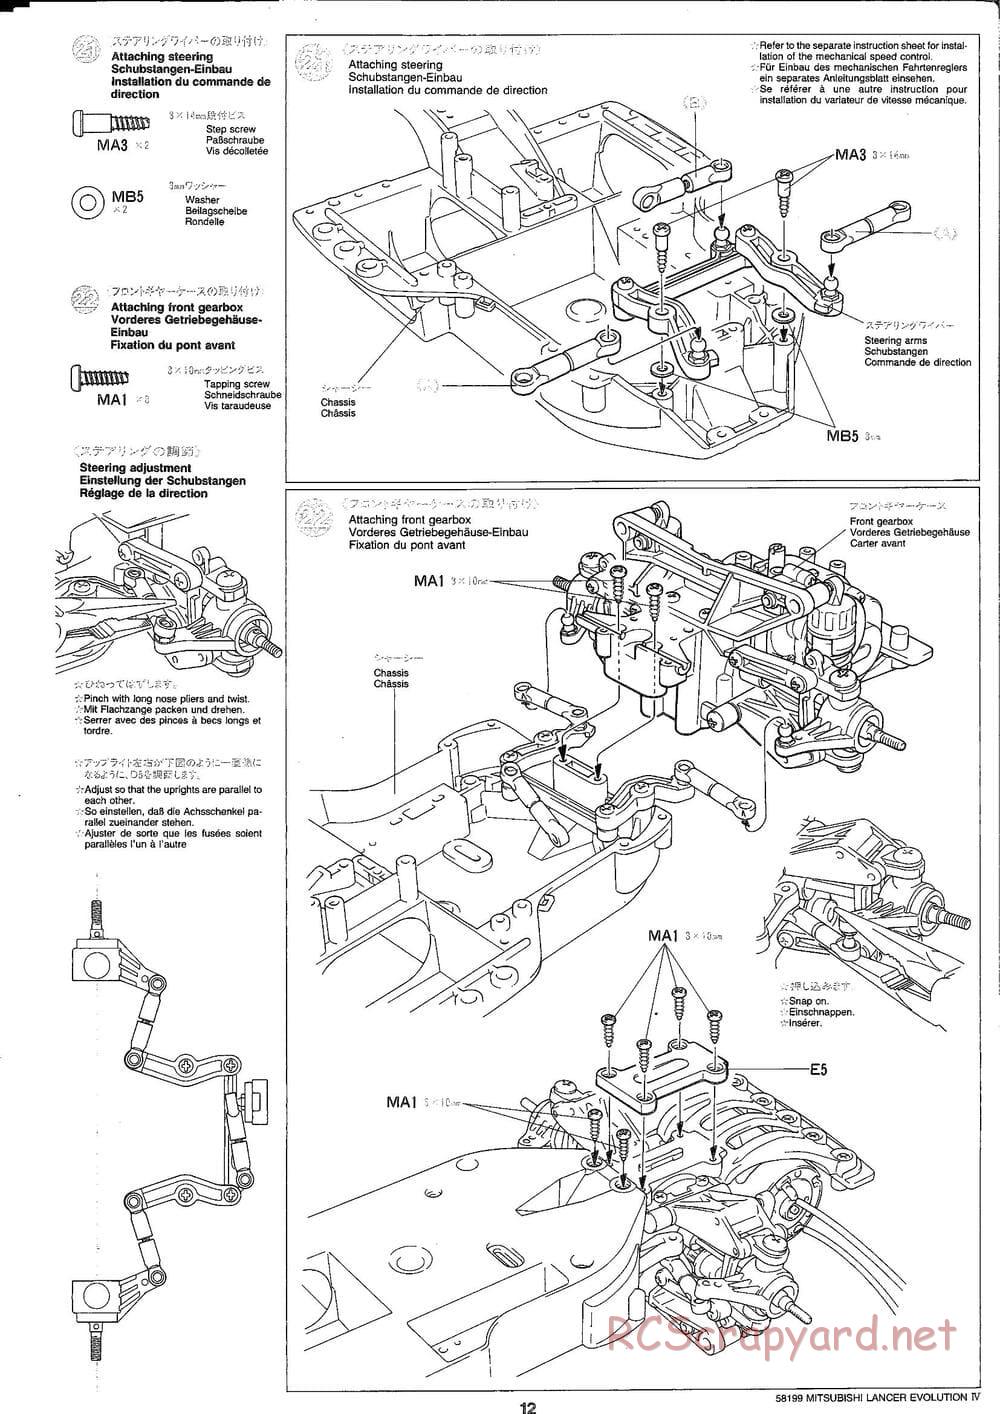 Tamiya - Mitsubishi Lancer Evolution IV - TA-03F Chassis - Manual - Page 12